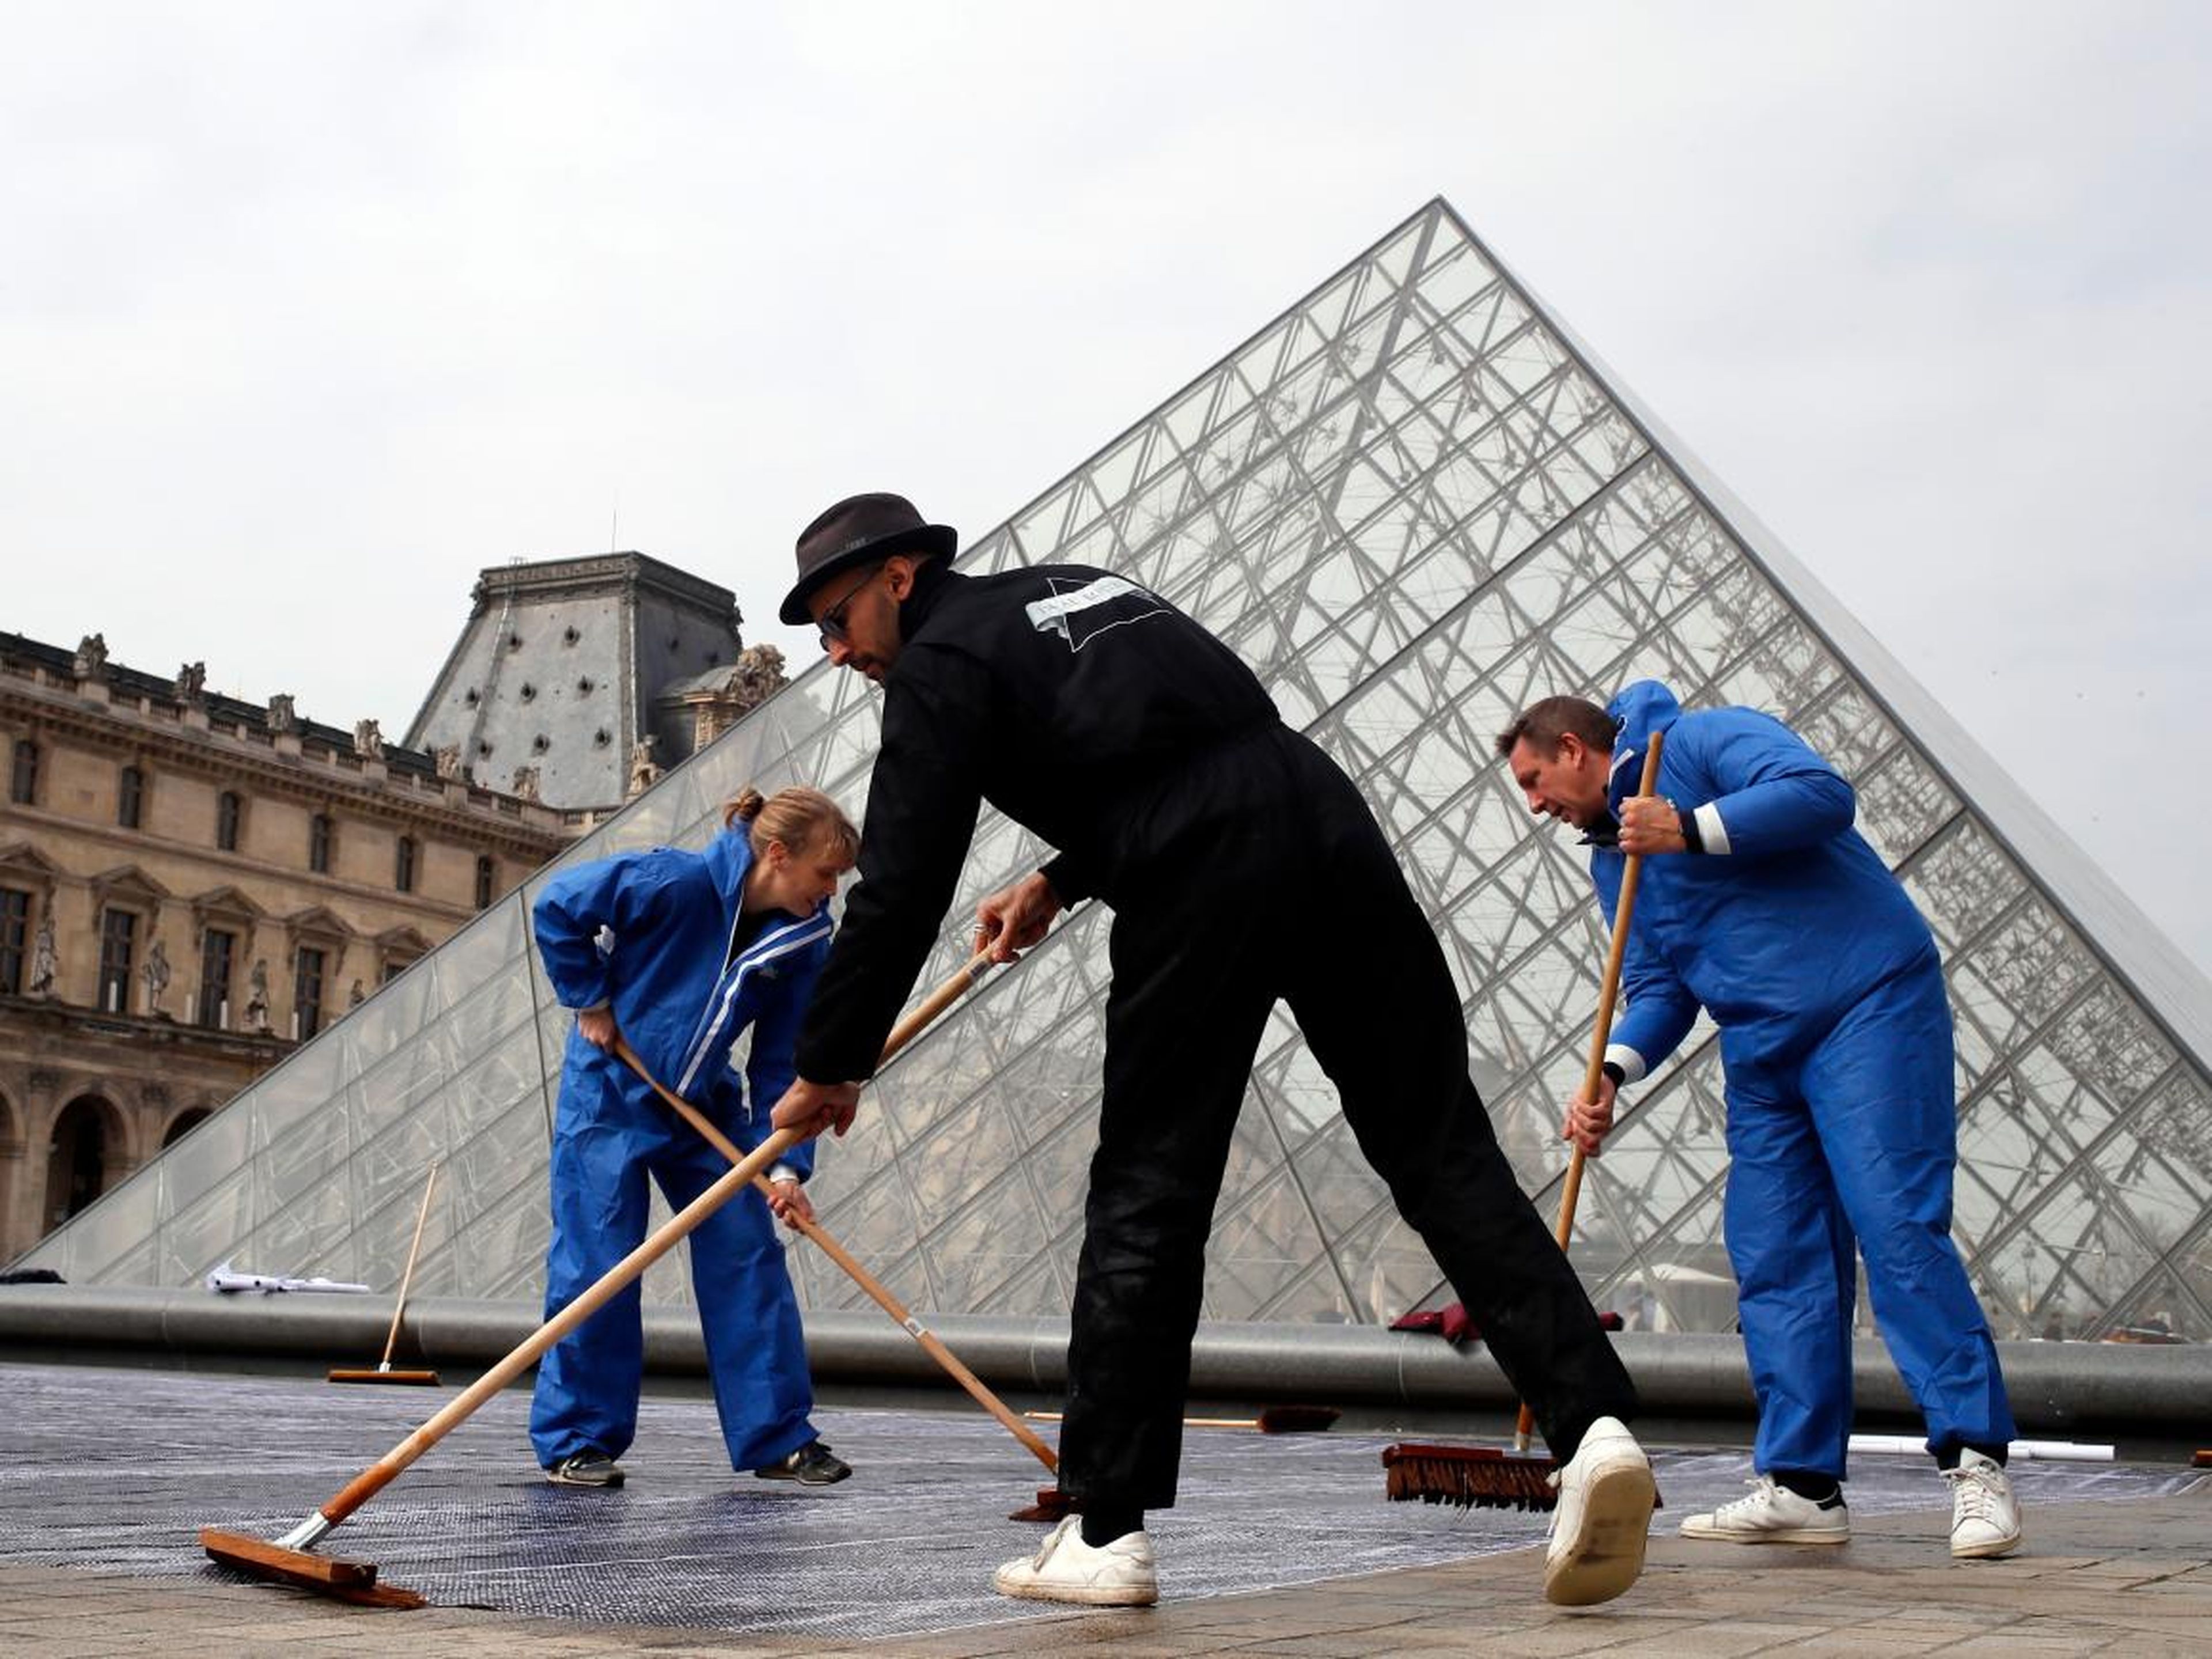 JR trabaja frente al Louvre en 2019.